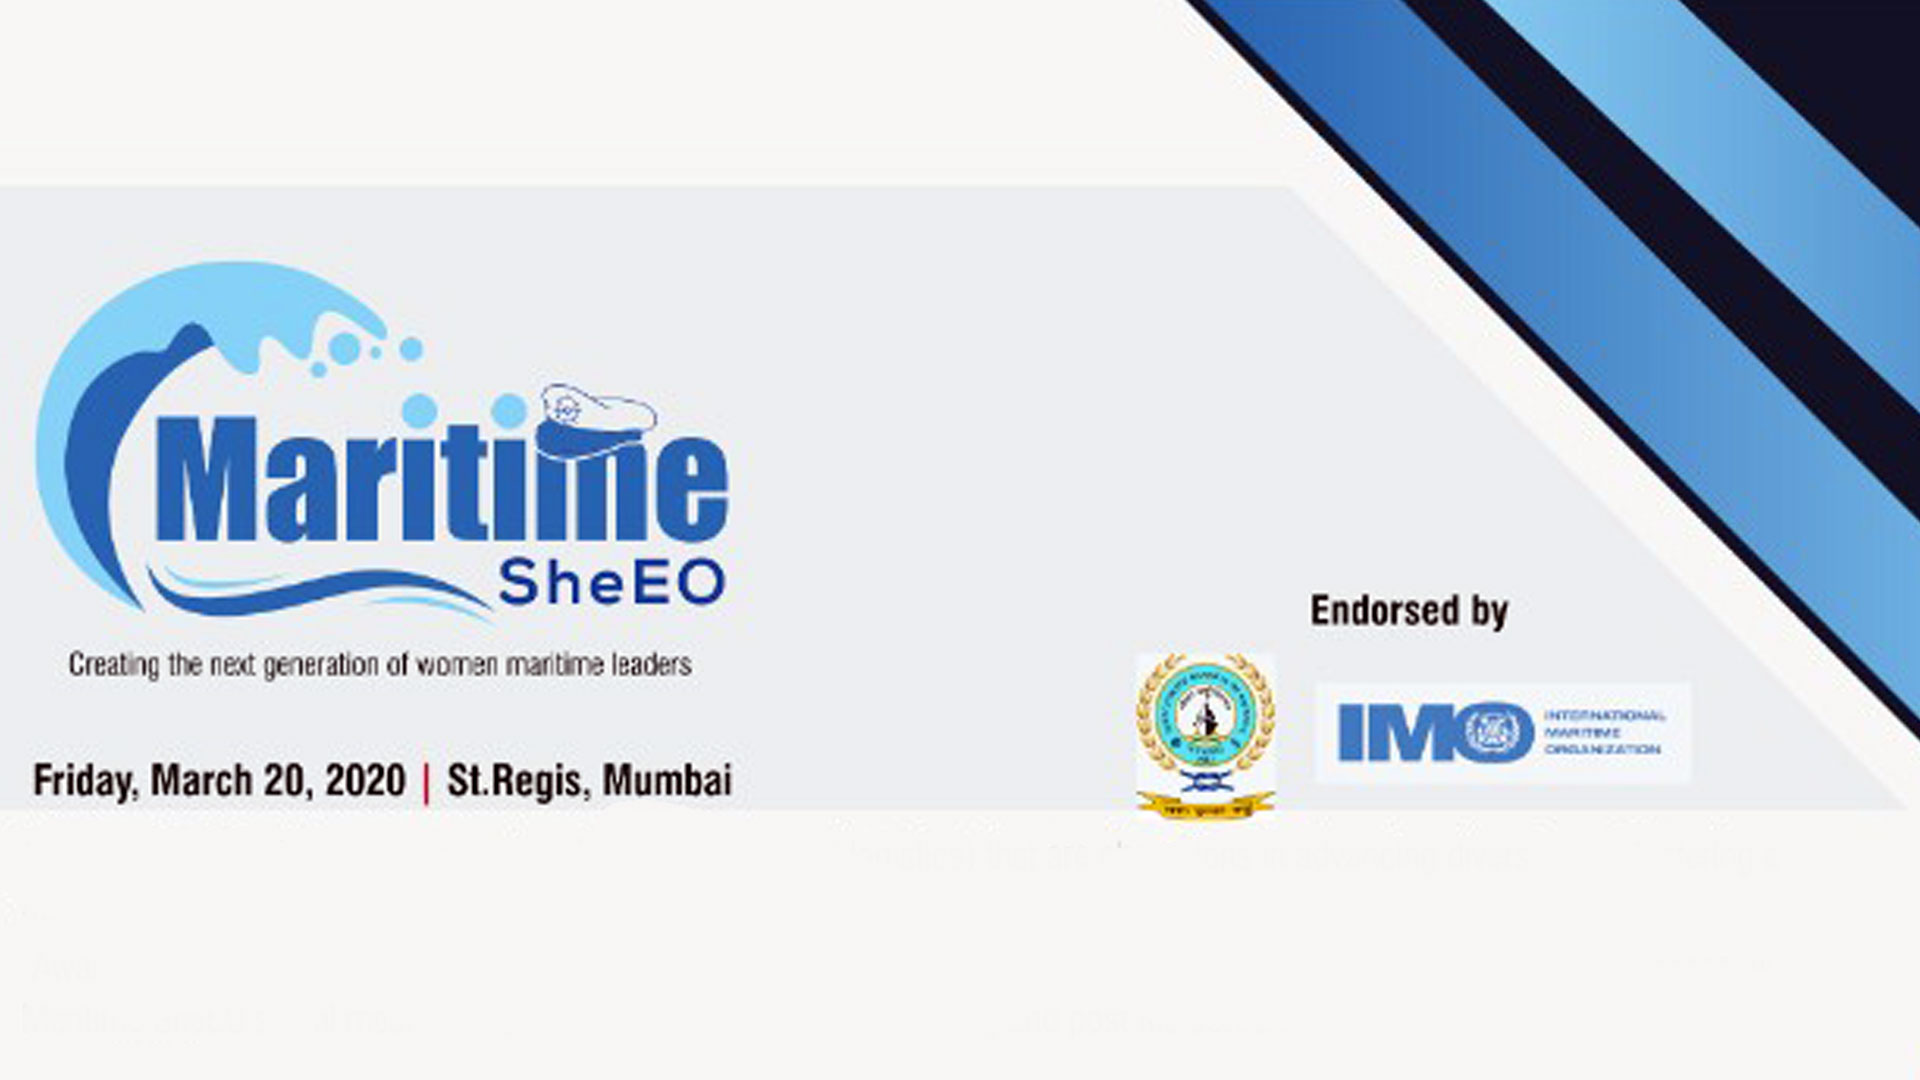 MARITIME SheEO CONFERENCE :FRIDAY, 20 MARCH 2020 @HOTEL ST.REGIS,MUMBAI